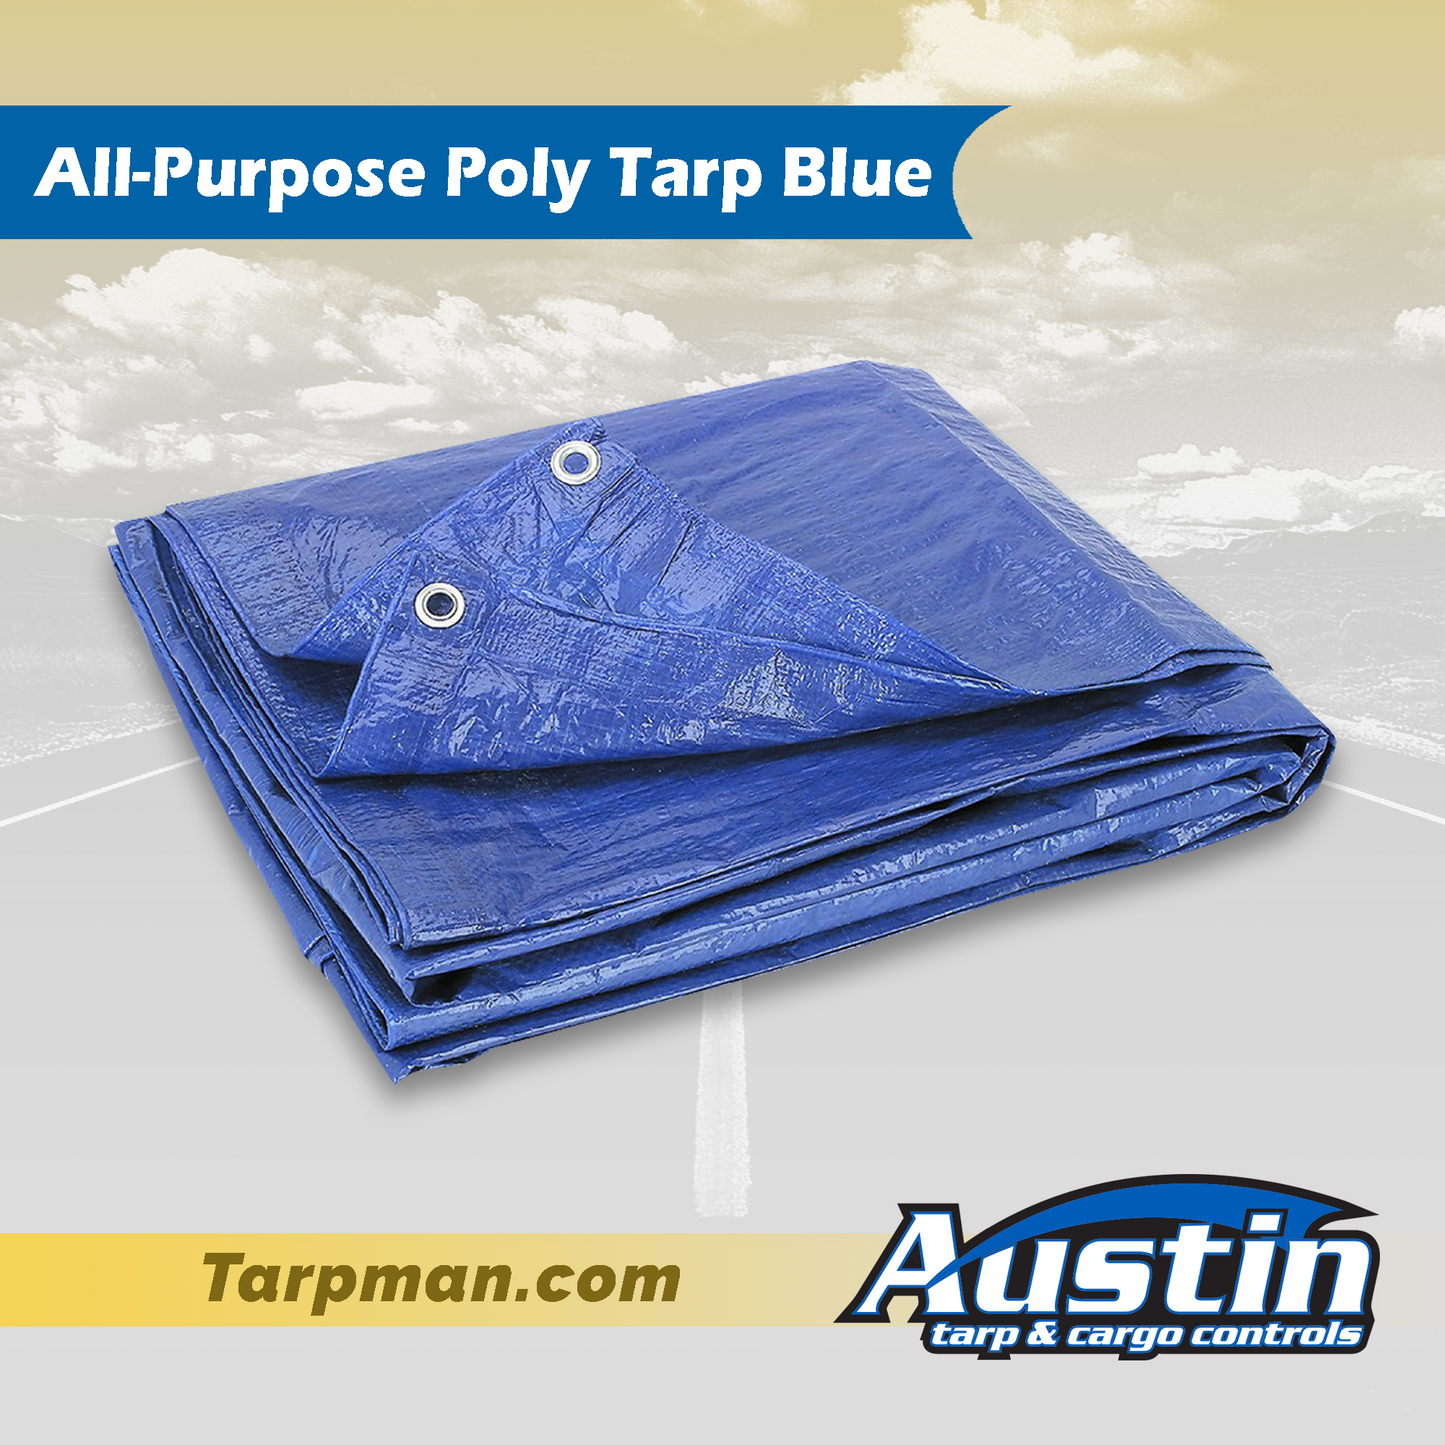 All-Purpose Poly Tarp Blue